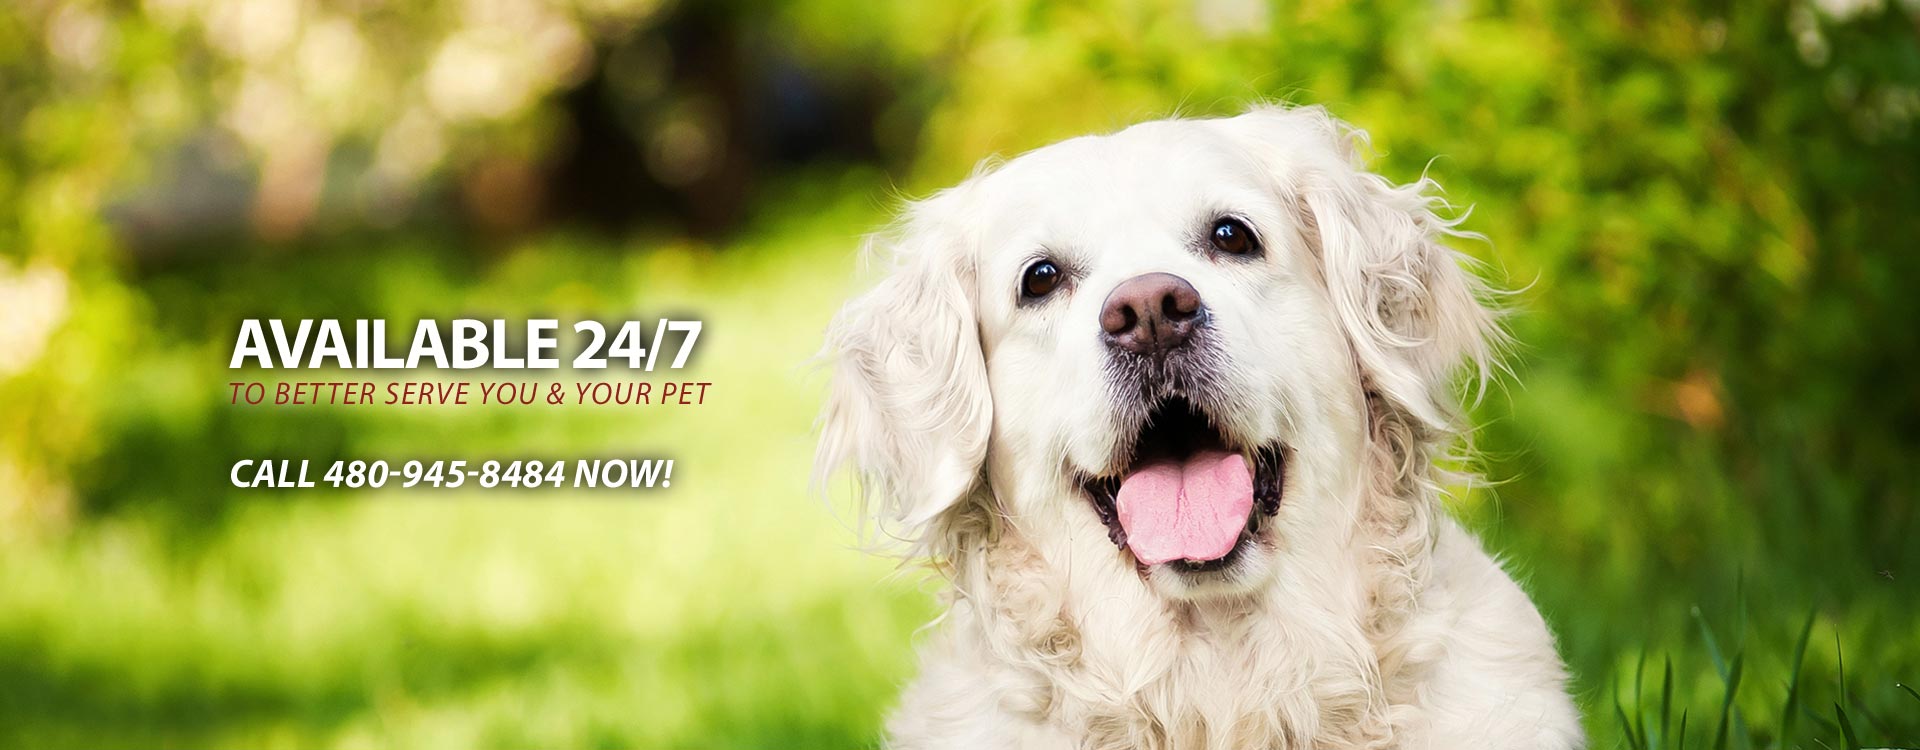 24 Hour Carefree Veterinary Service